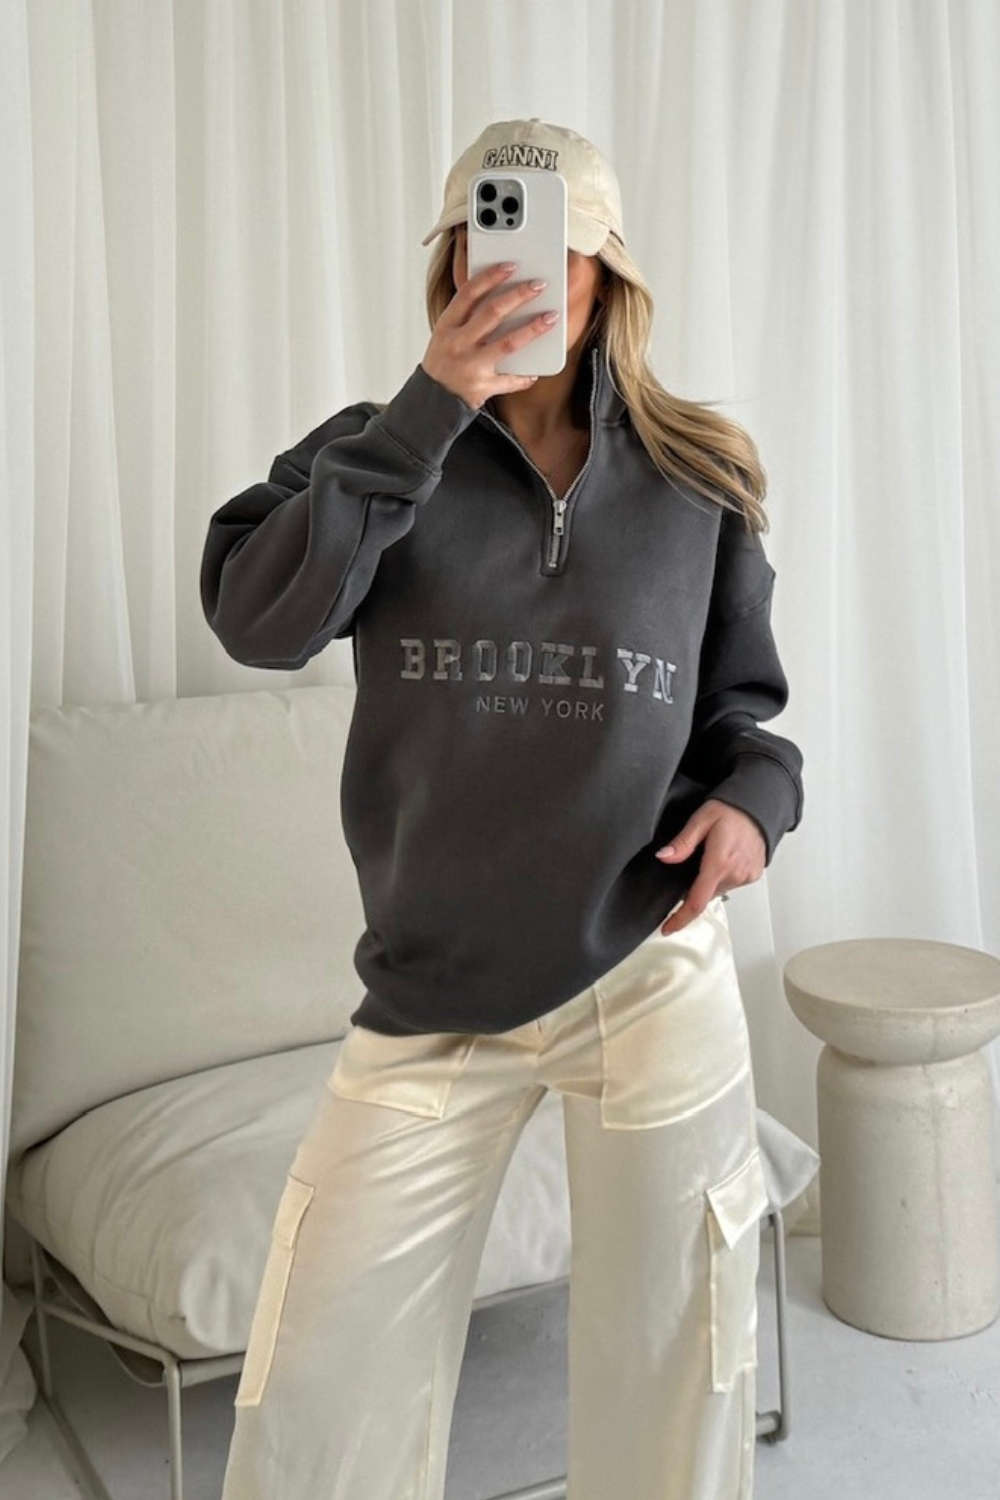 Kallie steel grey 3/4 sweater and legging set